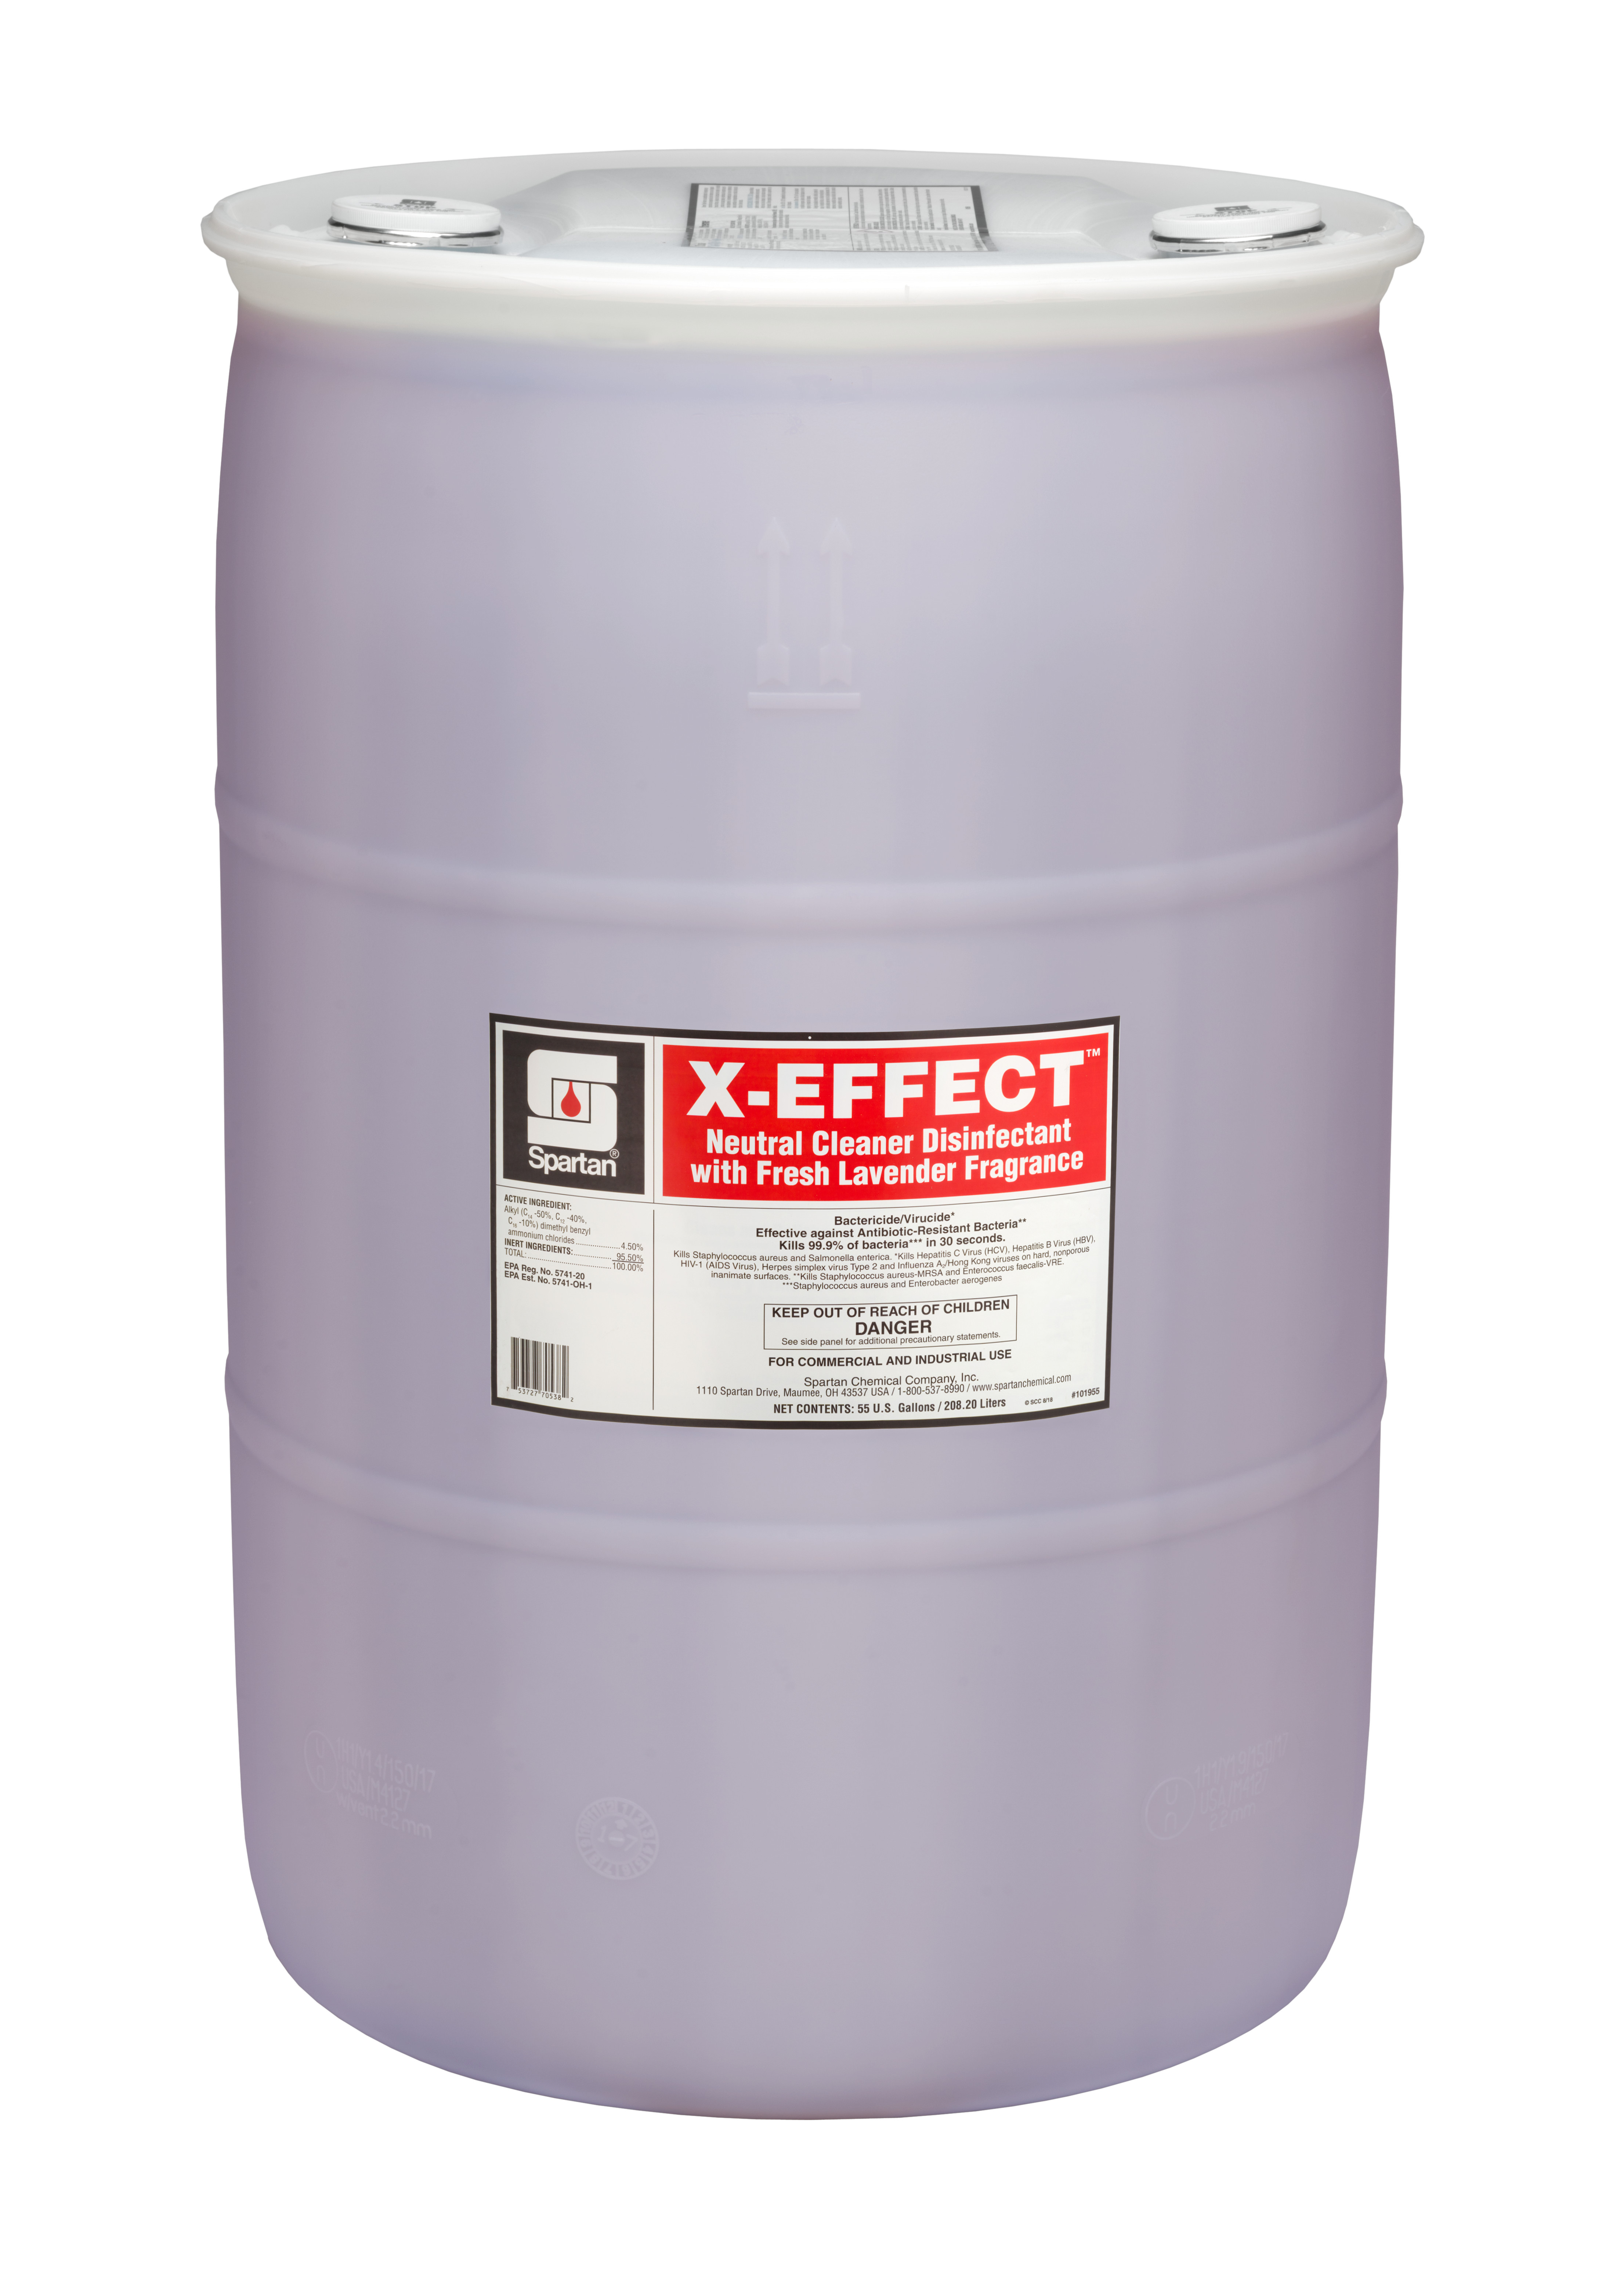 Spartan Chemical Company X-EFFECT, 55 GAL DRUM